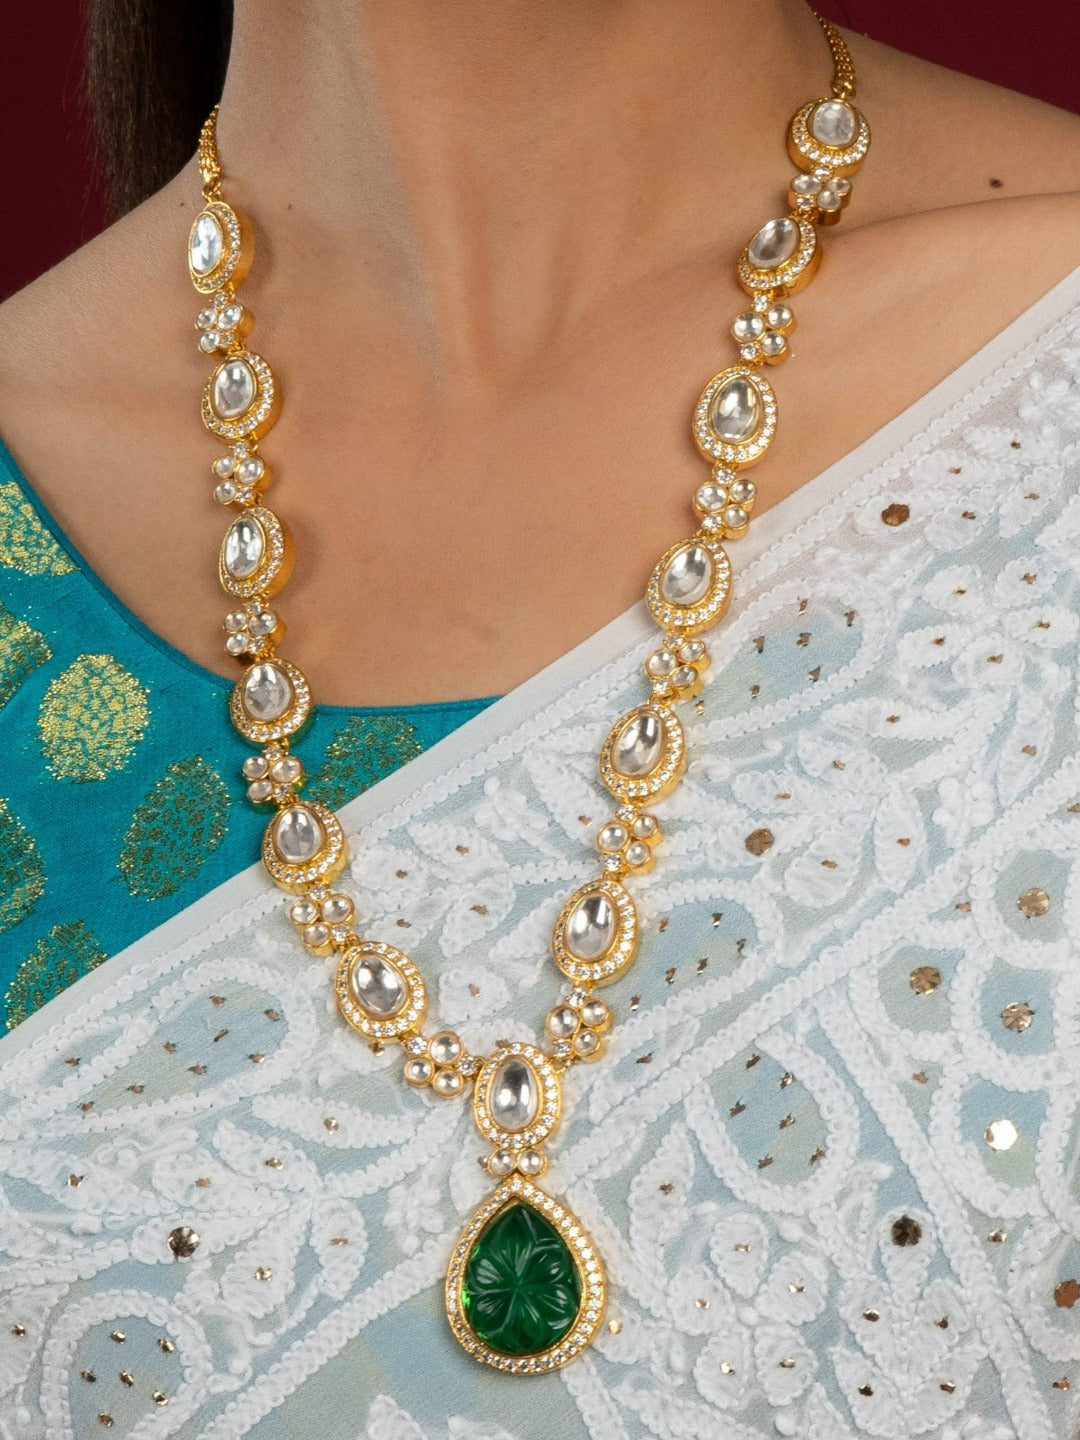 Tear drop shaped emerald & white kundan long necklace